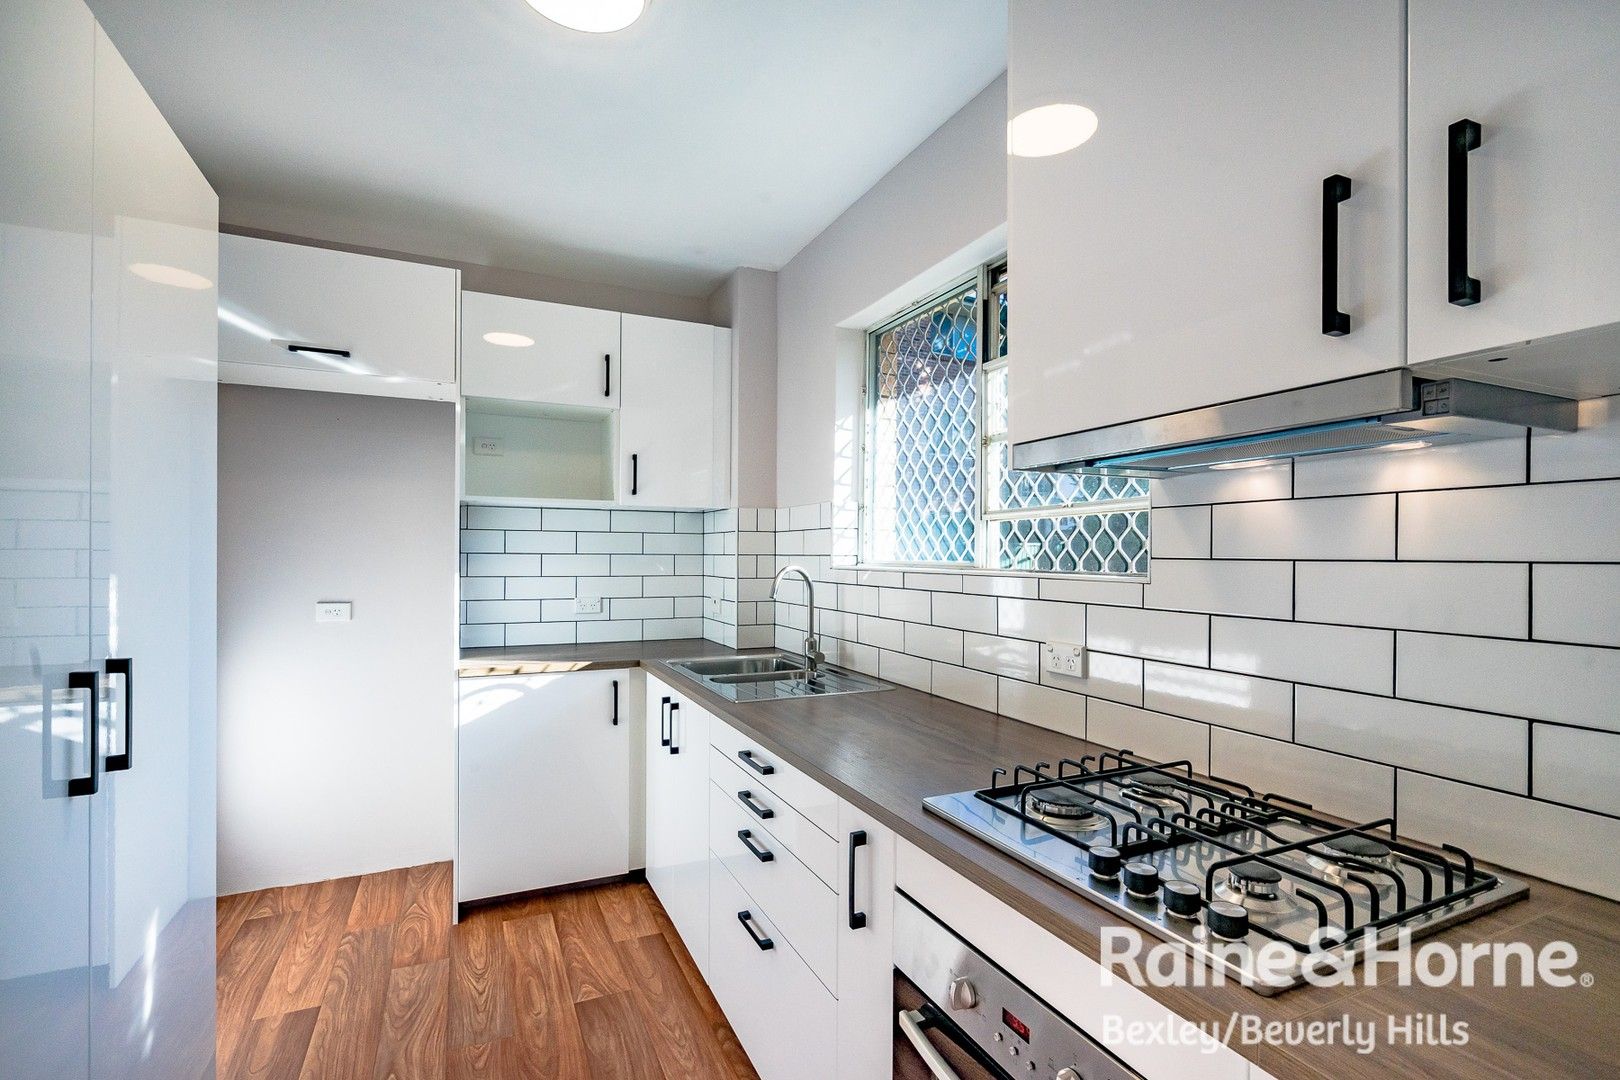 2 bedrooms Apartment / Unit / Flat in 2/11-15 Kiora Road MIRANDA NSW, 2228